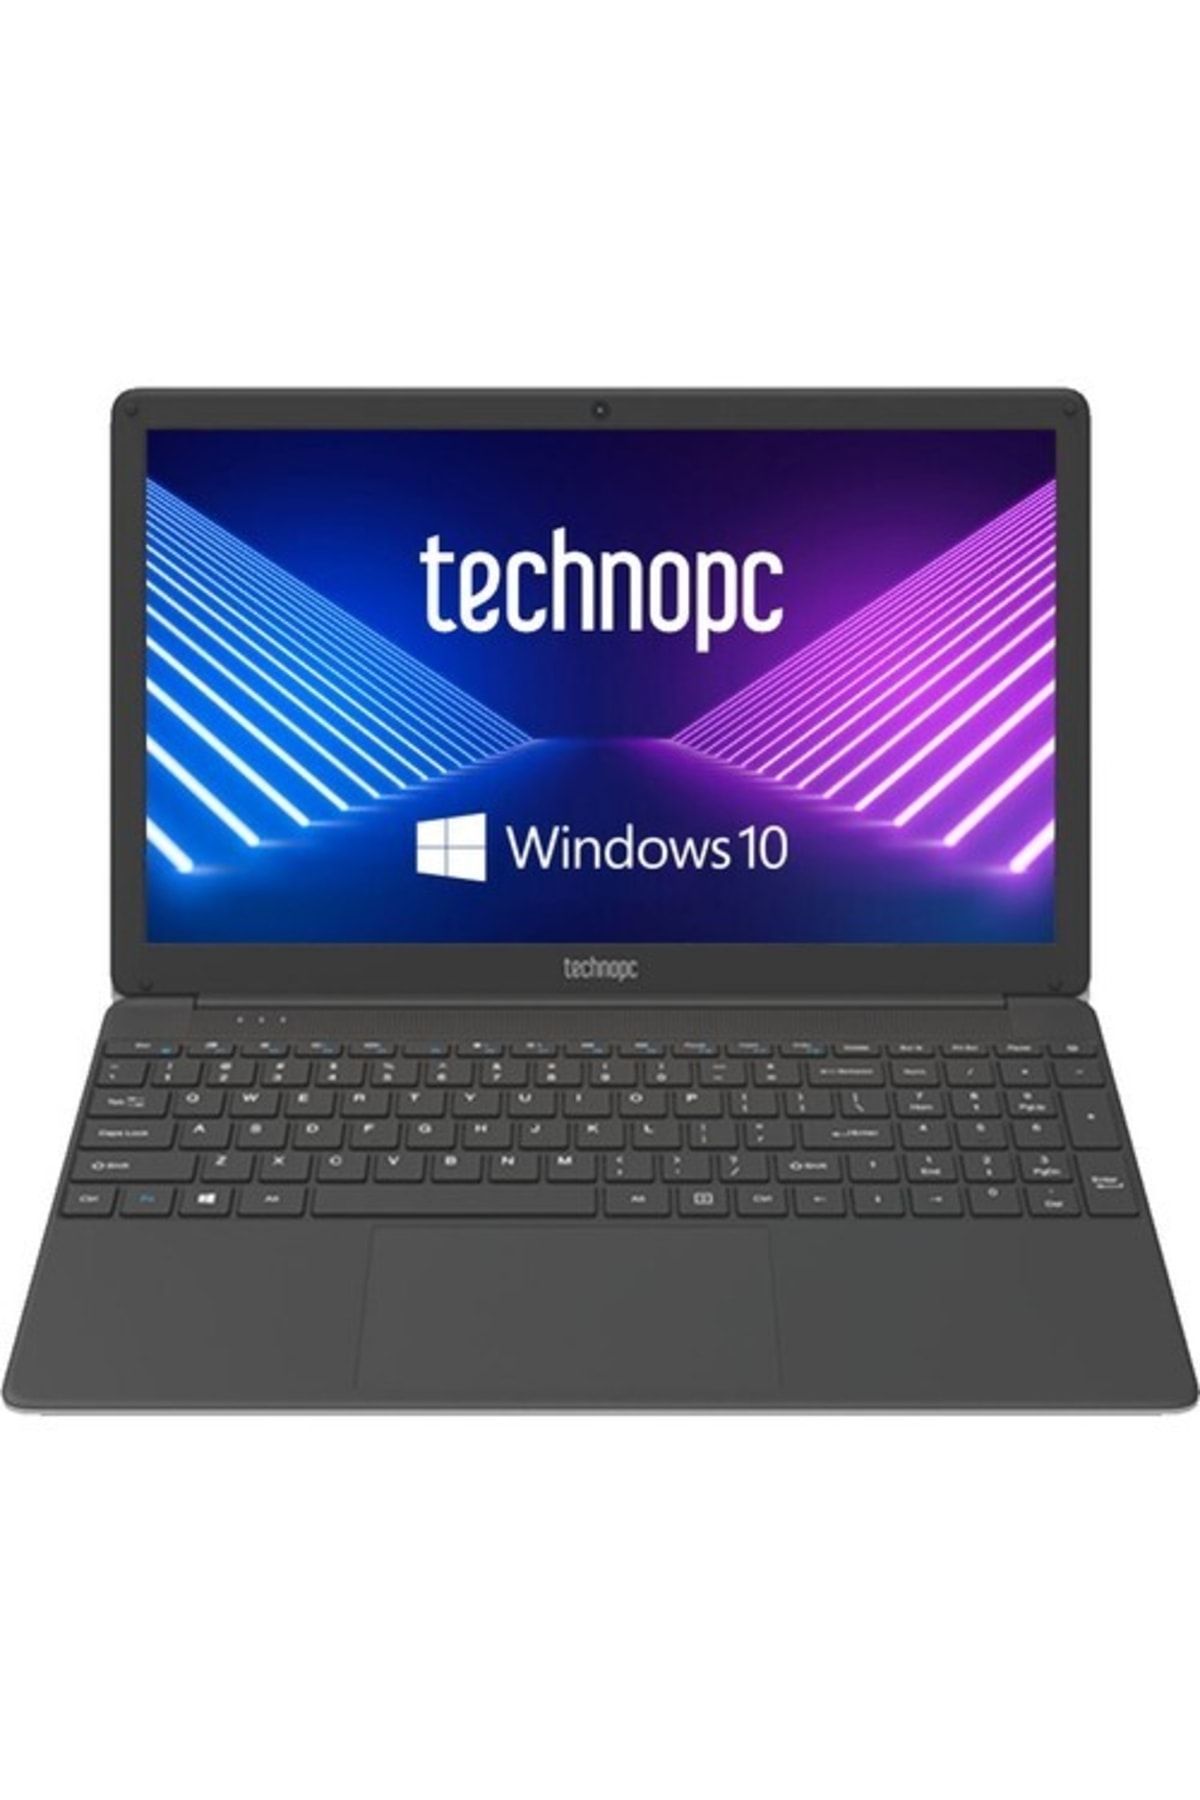 Technopc Genius Tı15s5 Intel I5-6287 8gb-256gb Ssd 1000mah Bt 4.0 5g Wifi Freedos 15.6" Notebook